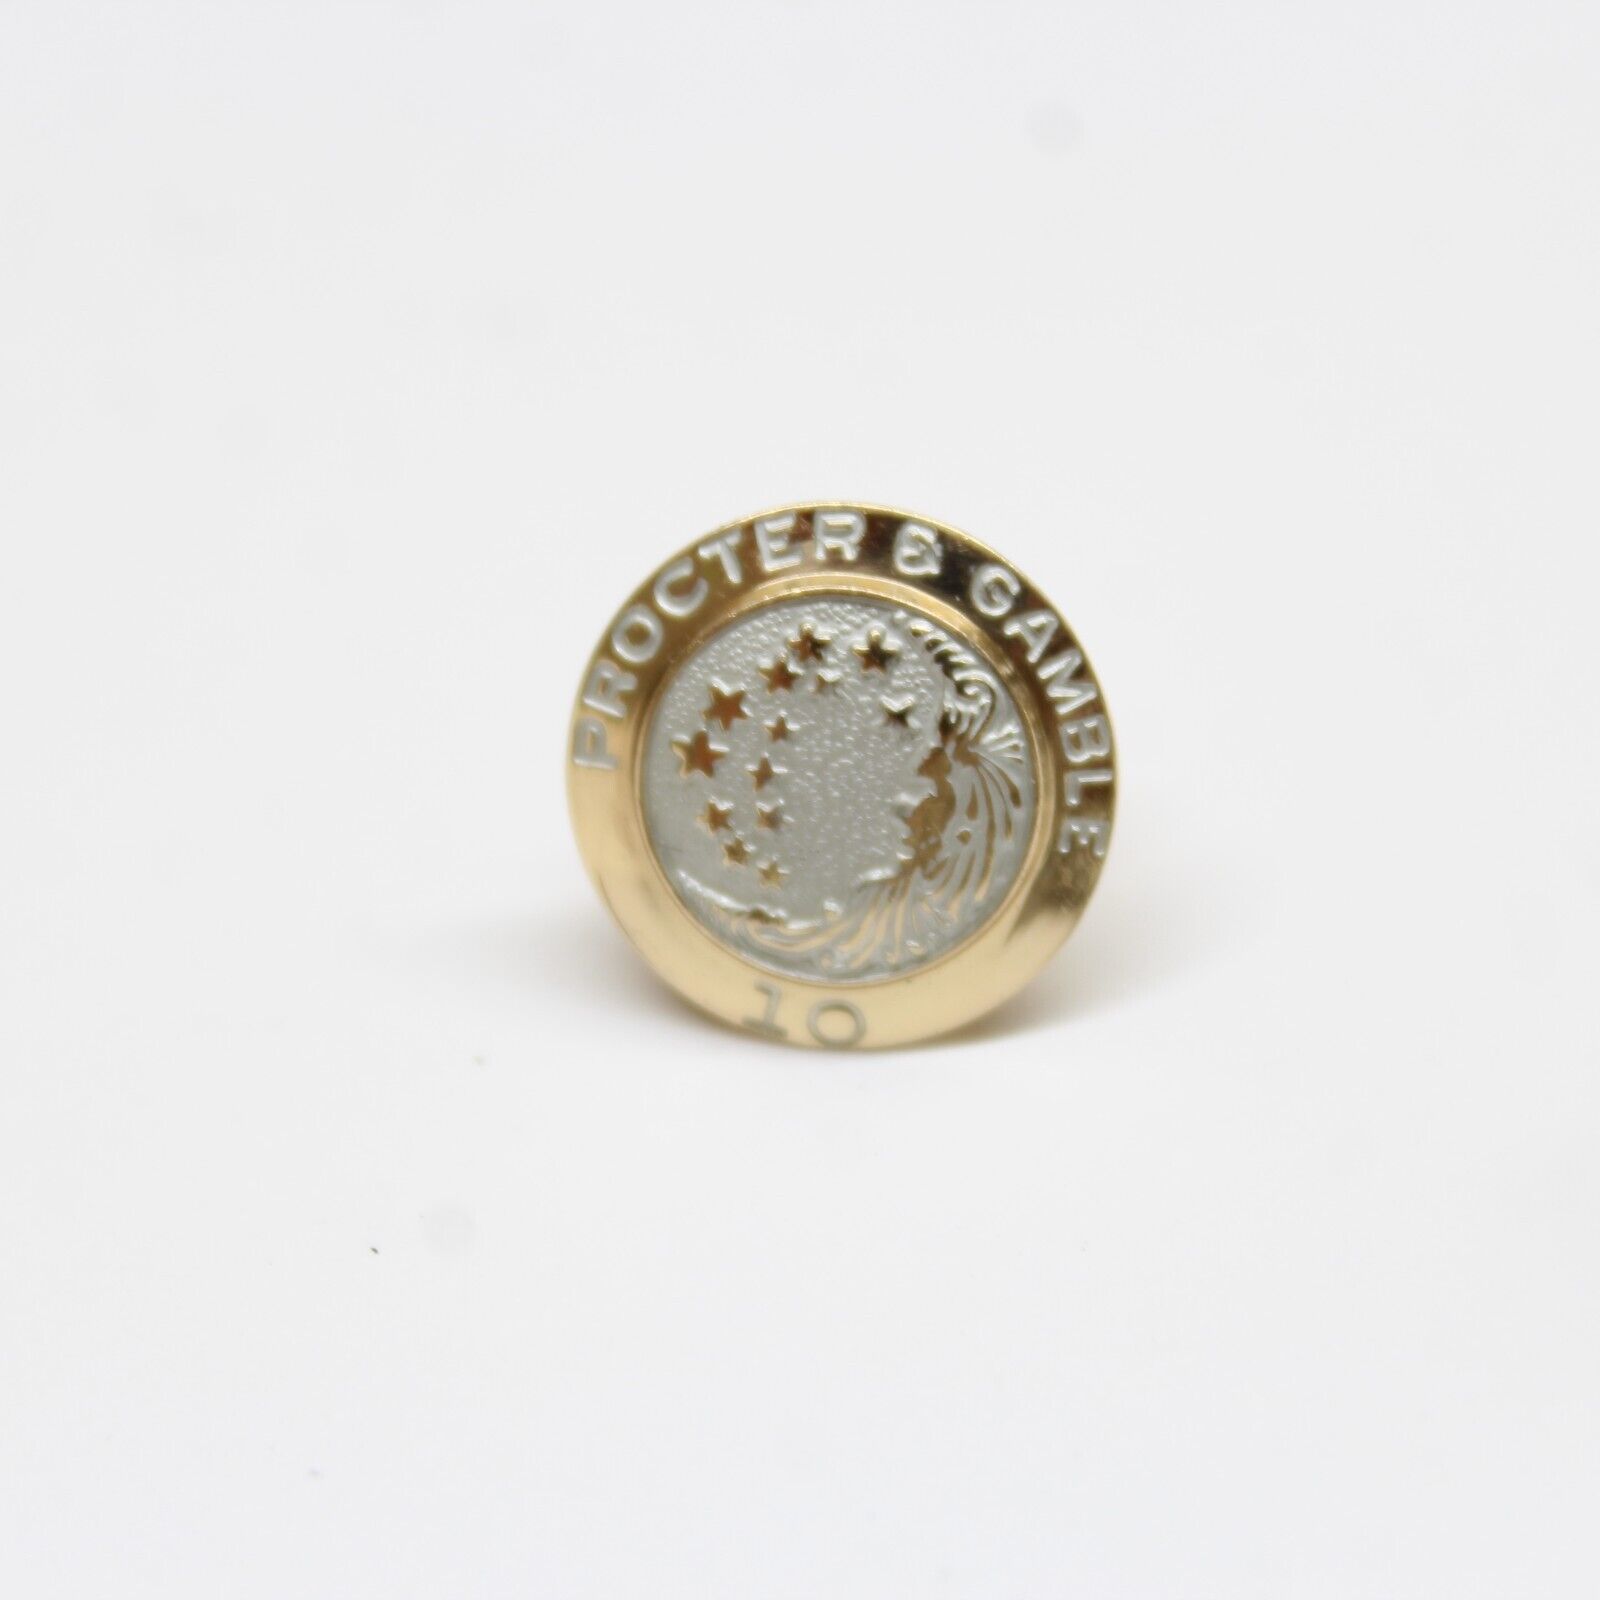 Procter & Gamble 10 Years Service Pin 10K Gold Lapel Enamel Collectible